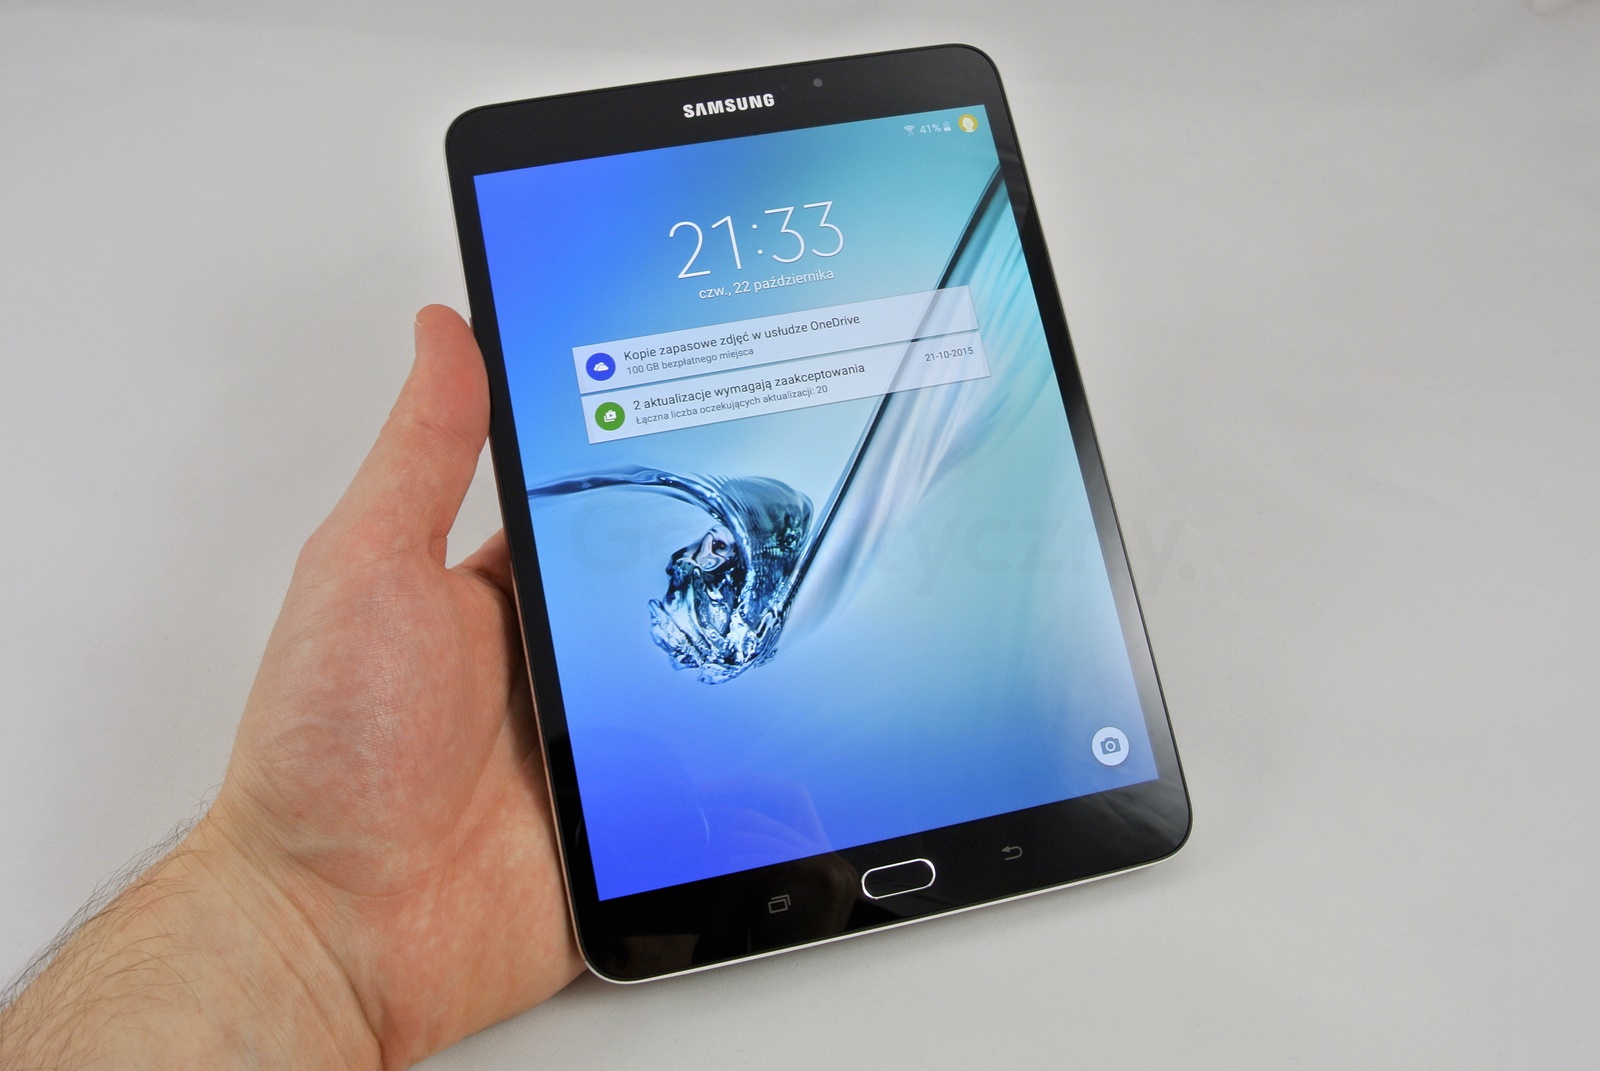 Samsung Galaxy Tab S2 8.0 / fot. galaktyczny